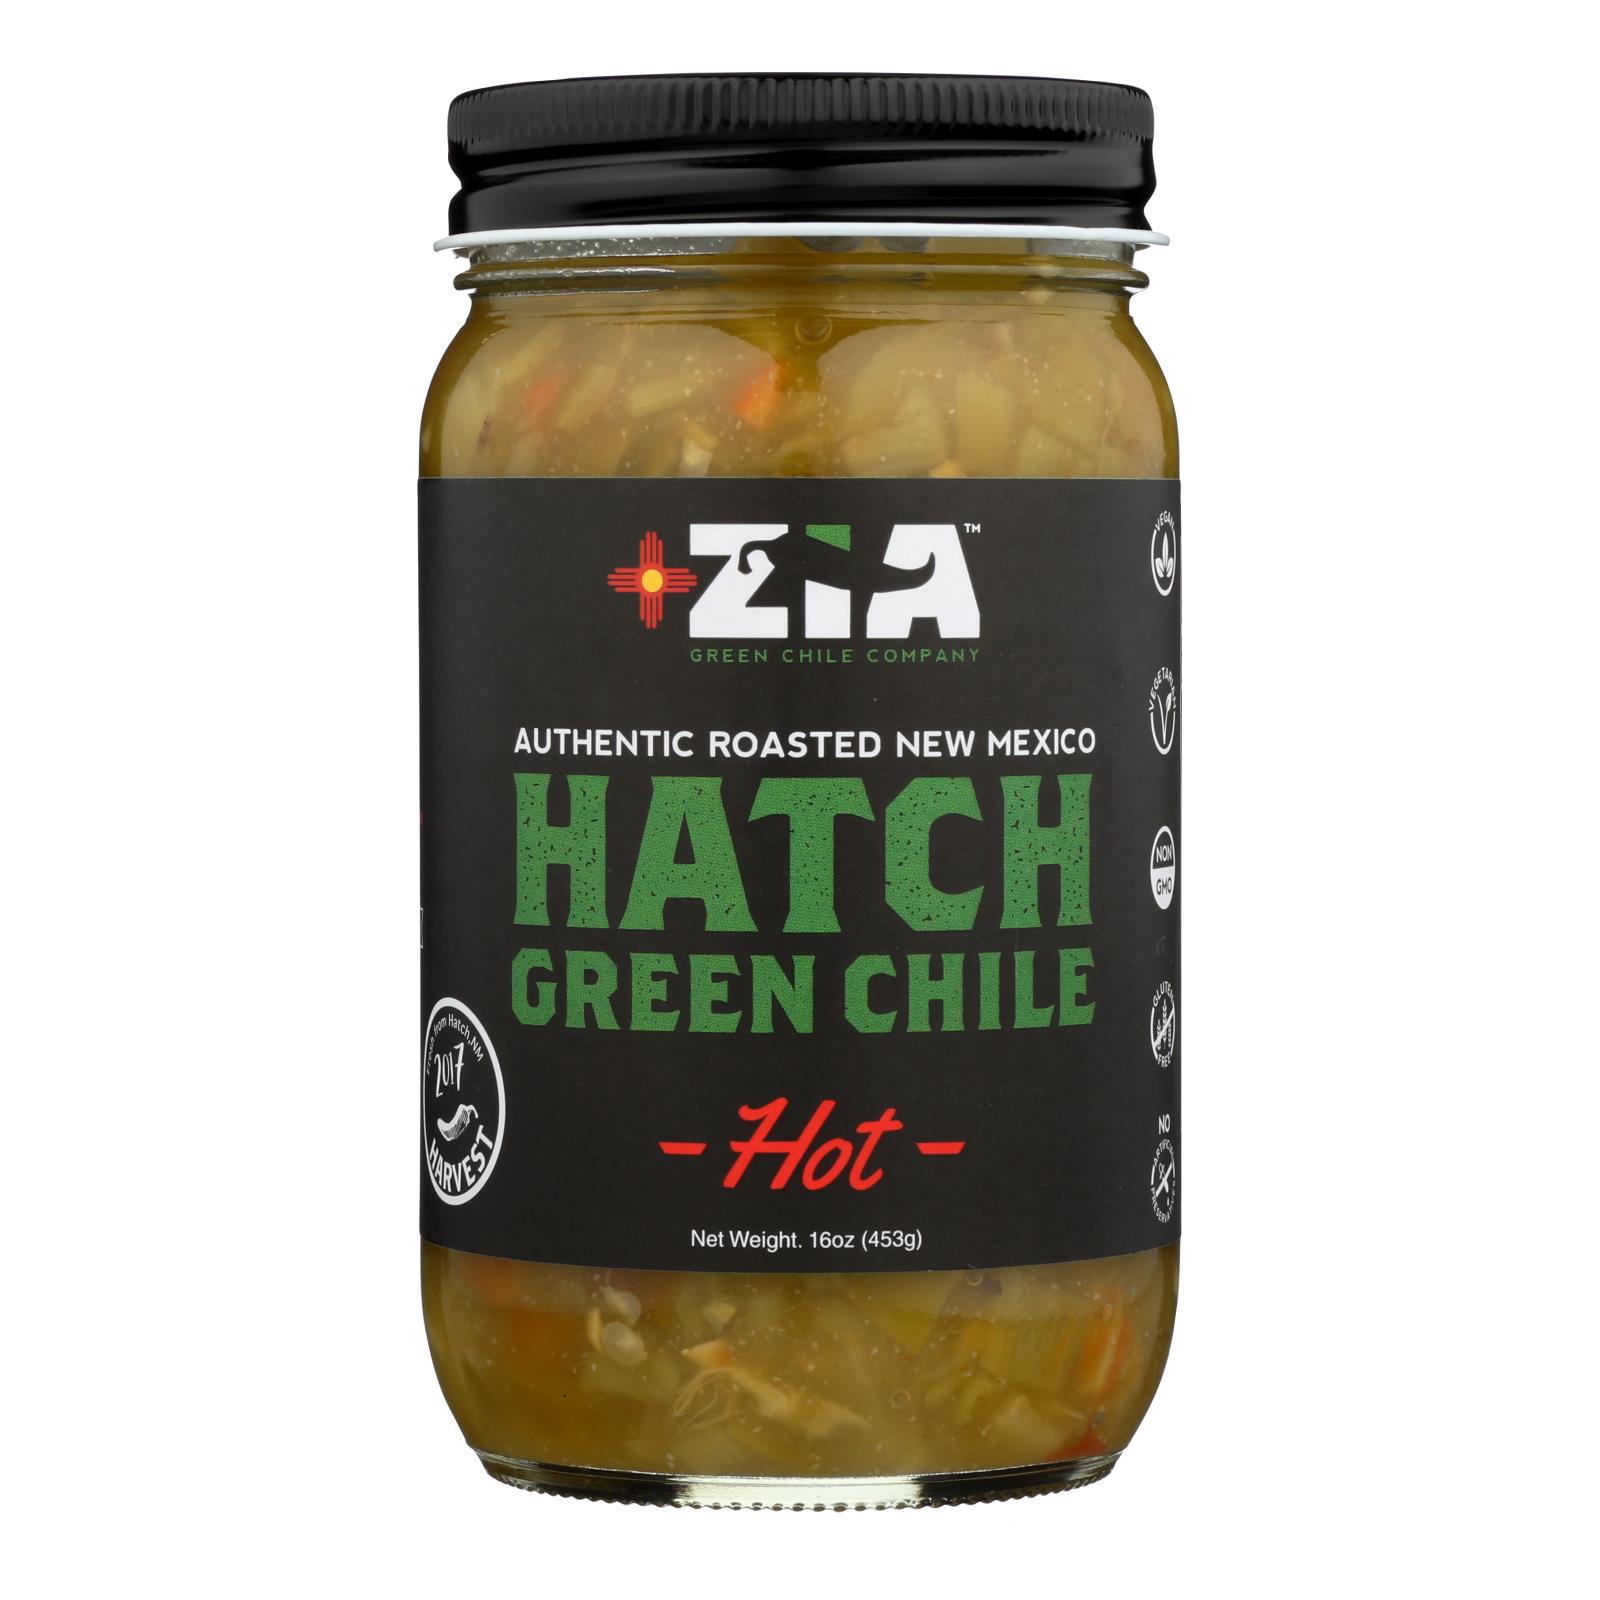 Zia Green Chile Company - Hatch Green Chile - Hot - 6개 묶음상품 - 16 oz.